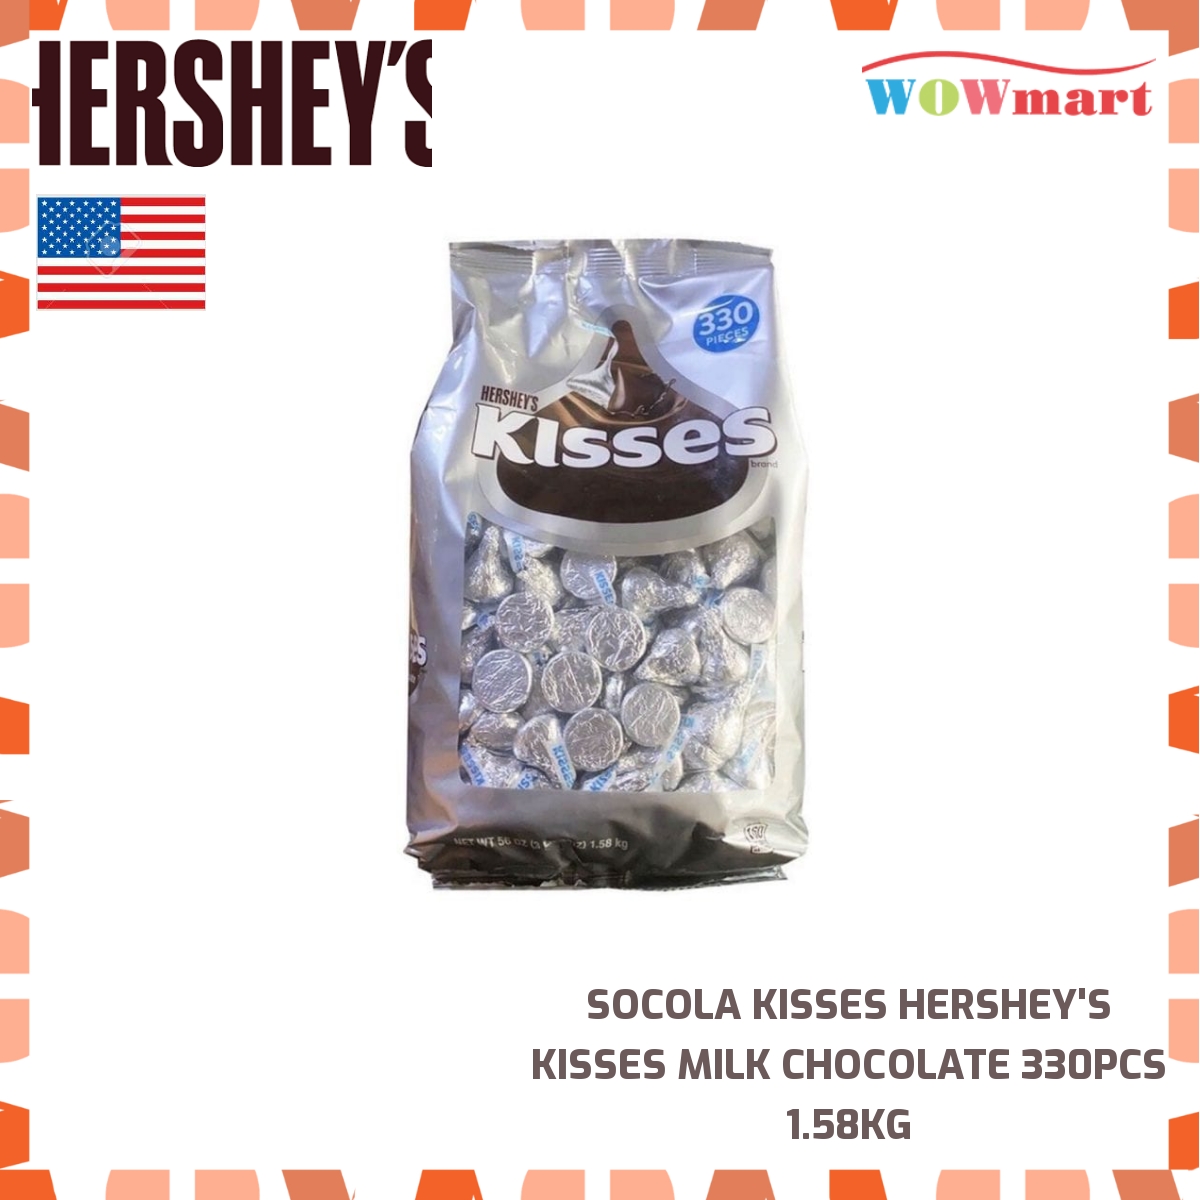 Socola Kisses Hershey's Kisses Milk Chocolate 330pcs 1.58kg